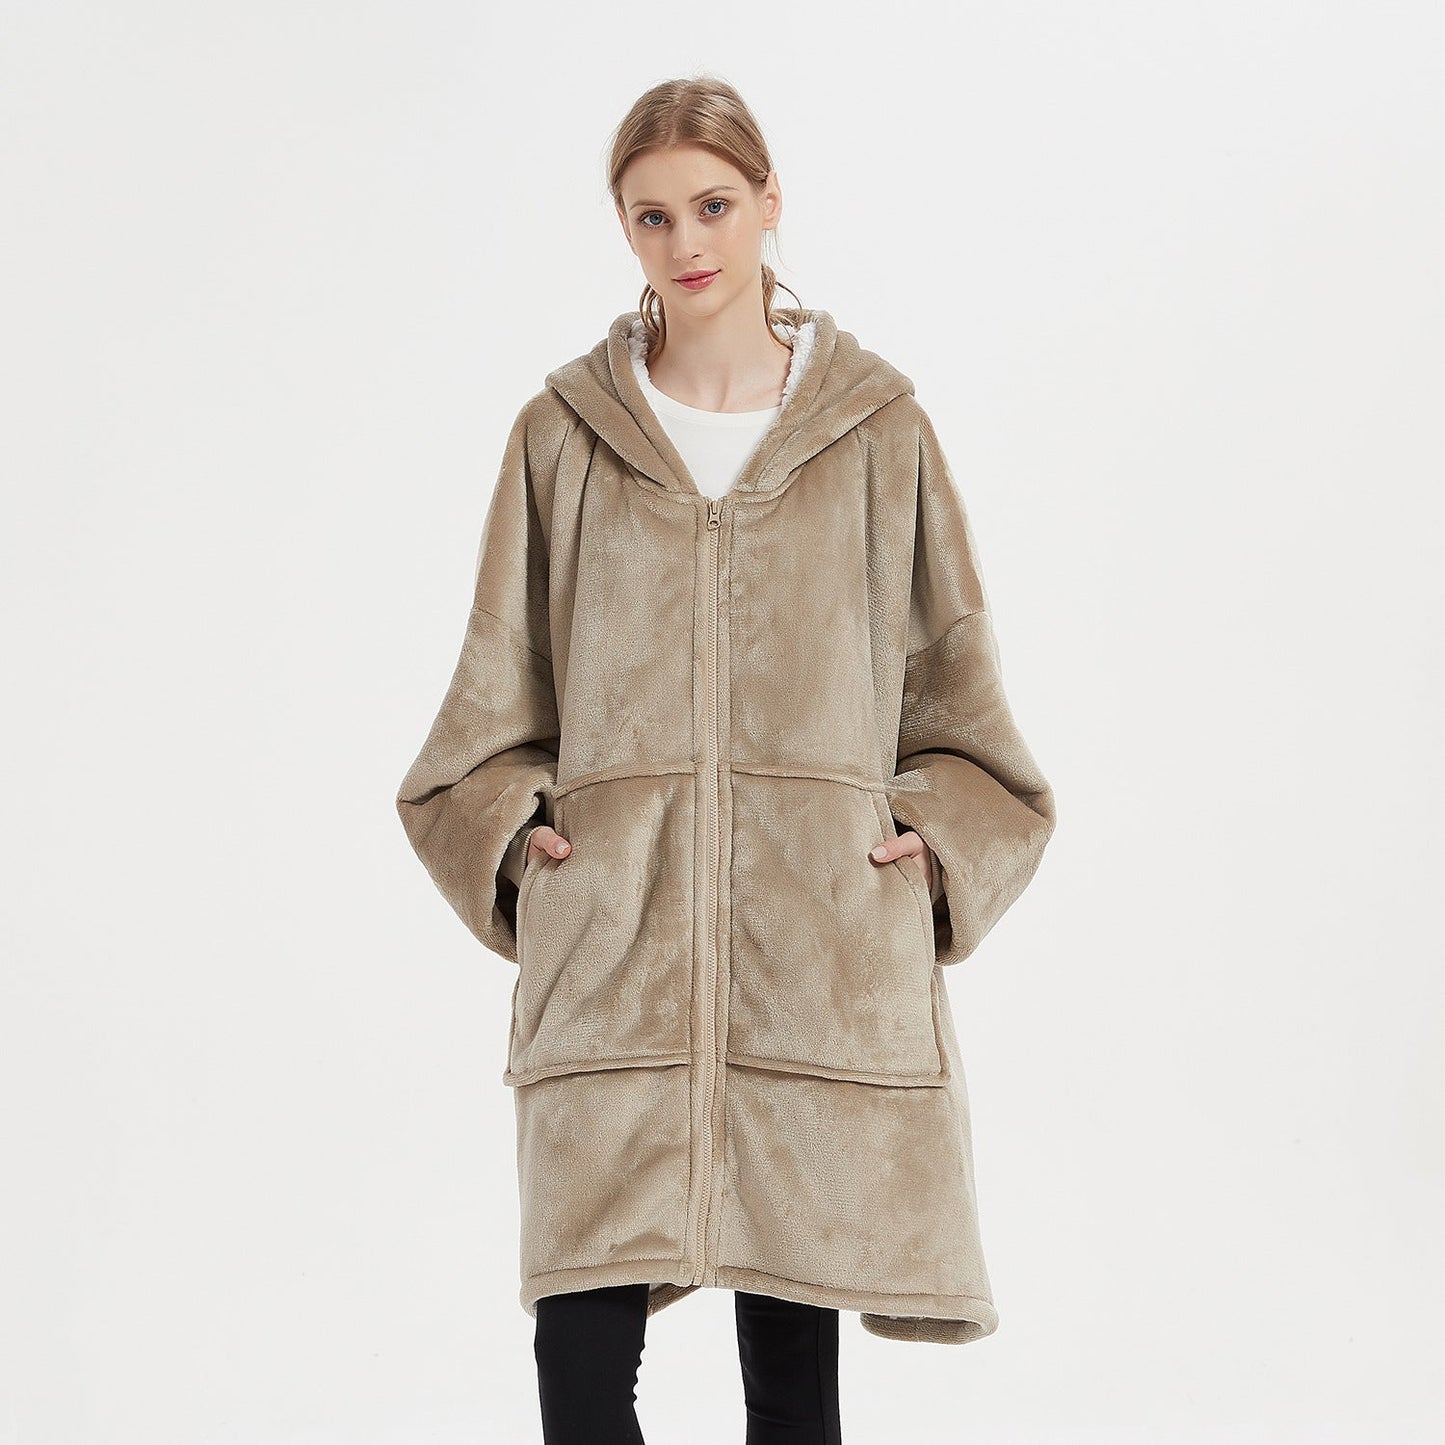 Warm Thick Plus Sizes Wearable Fleece Throw Blanket for Couple-Homewear-Khaki-One Size 50-80kg-Free Shipping Leatheretro